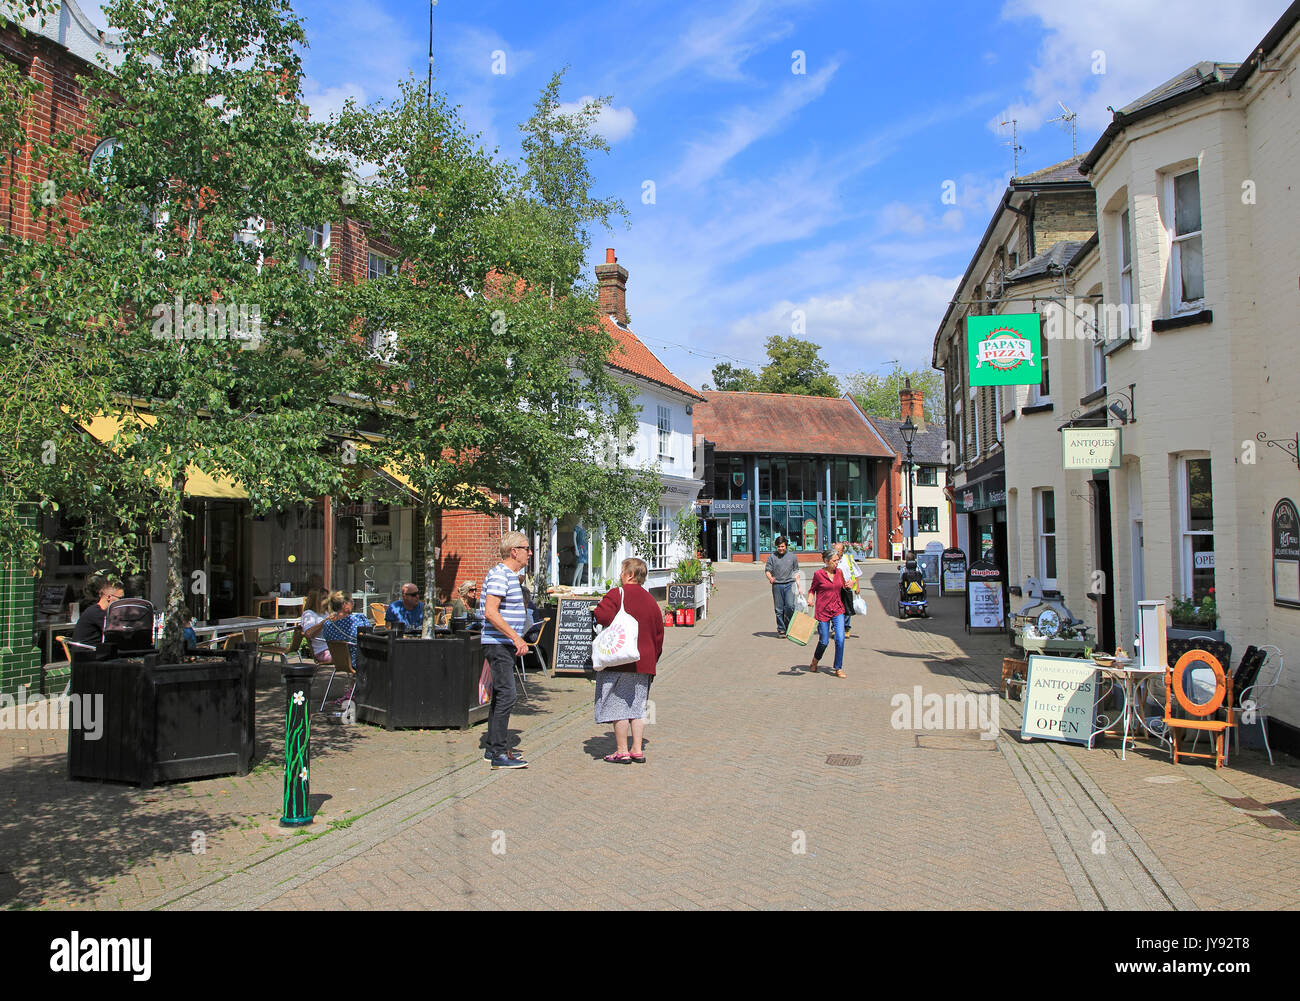 The main pedestrianised shopping street, Halesworth, Suffolk, England ...